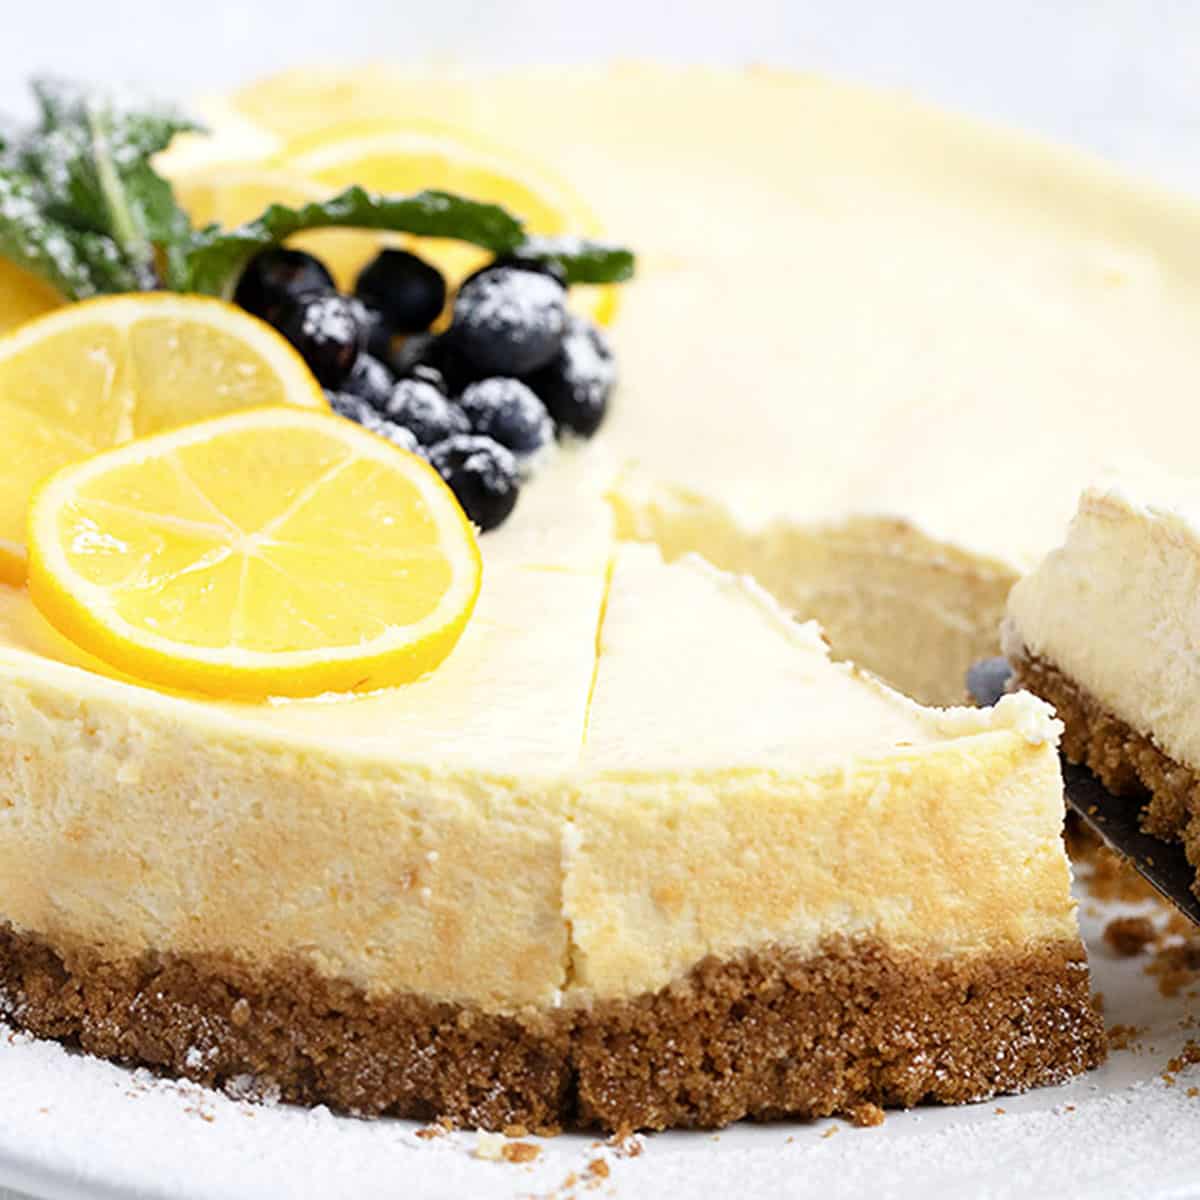 https://www.seasonsandsuppers.ca/wp-content/uploads/2020/02/meyer-lemon-cheesecake-1200.jpg